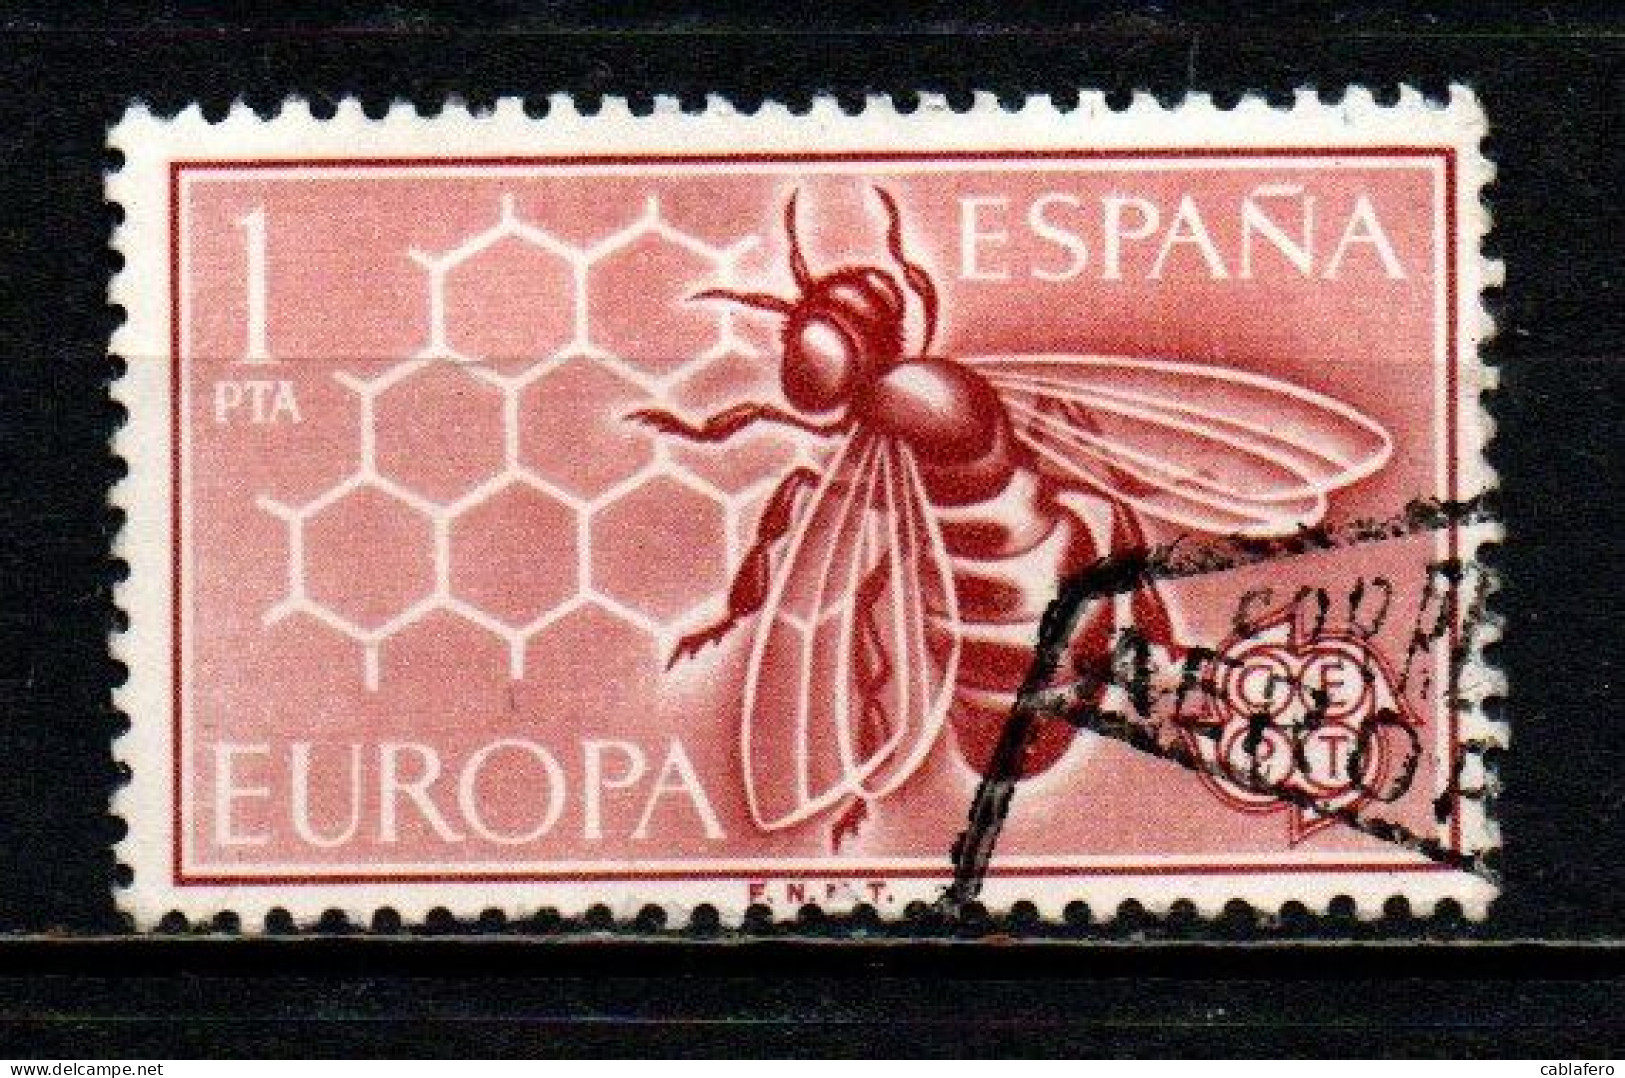 SPAGNA - 1962 - EUROPA UNITA - APE - USATO - Used Stamps